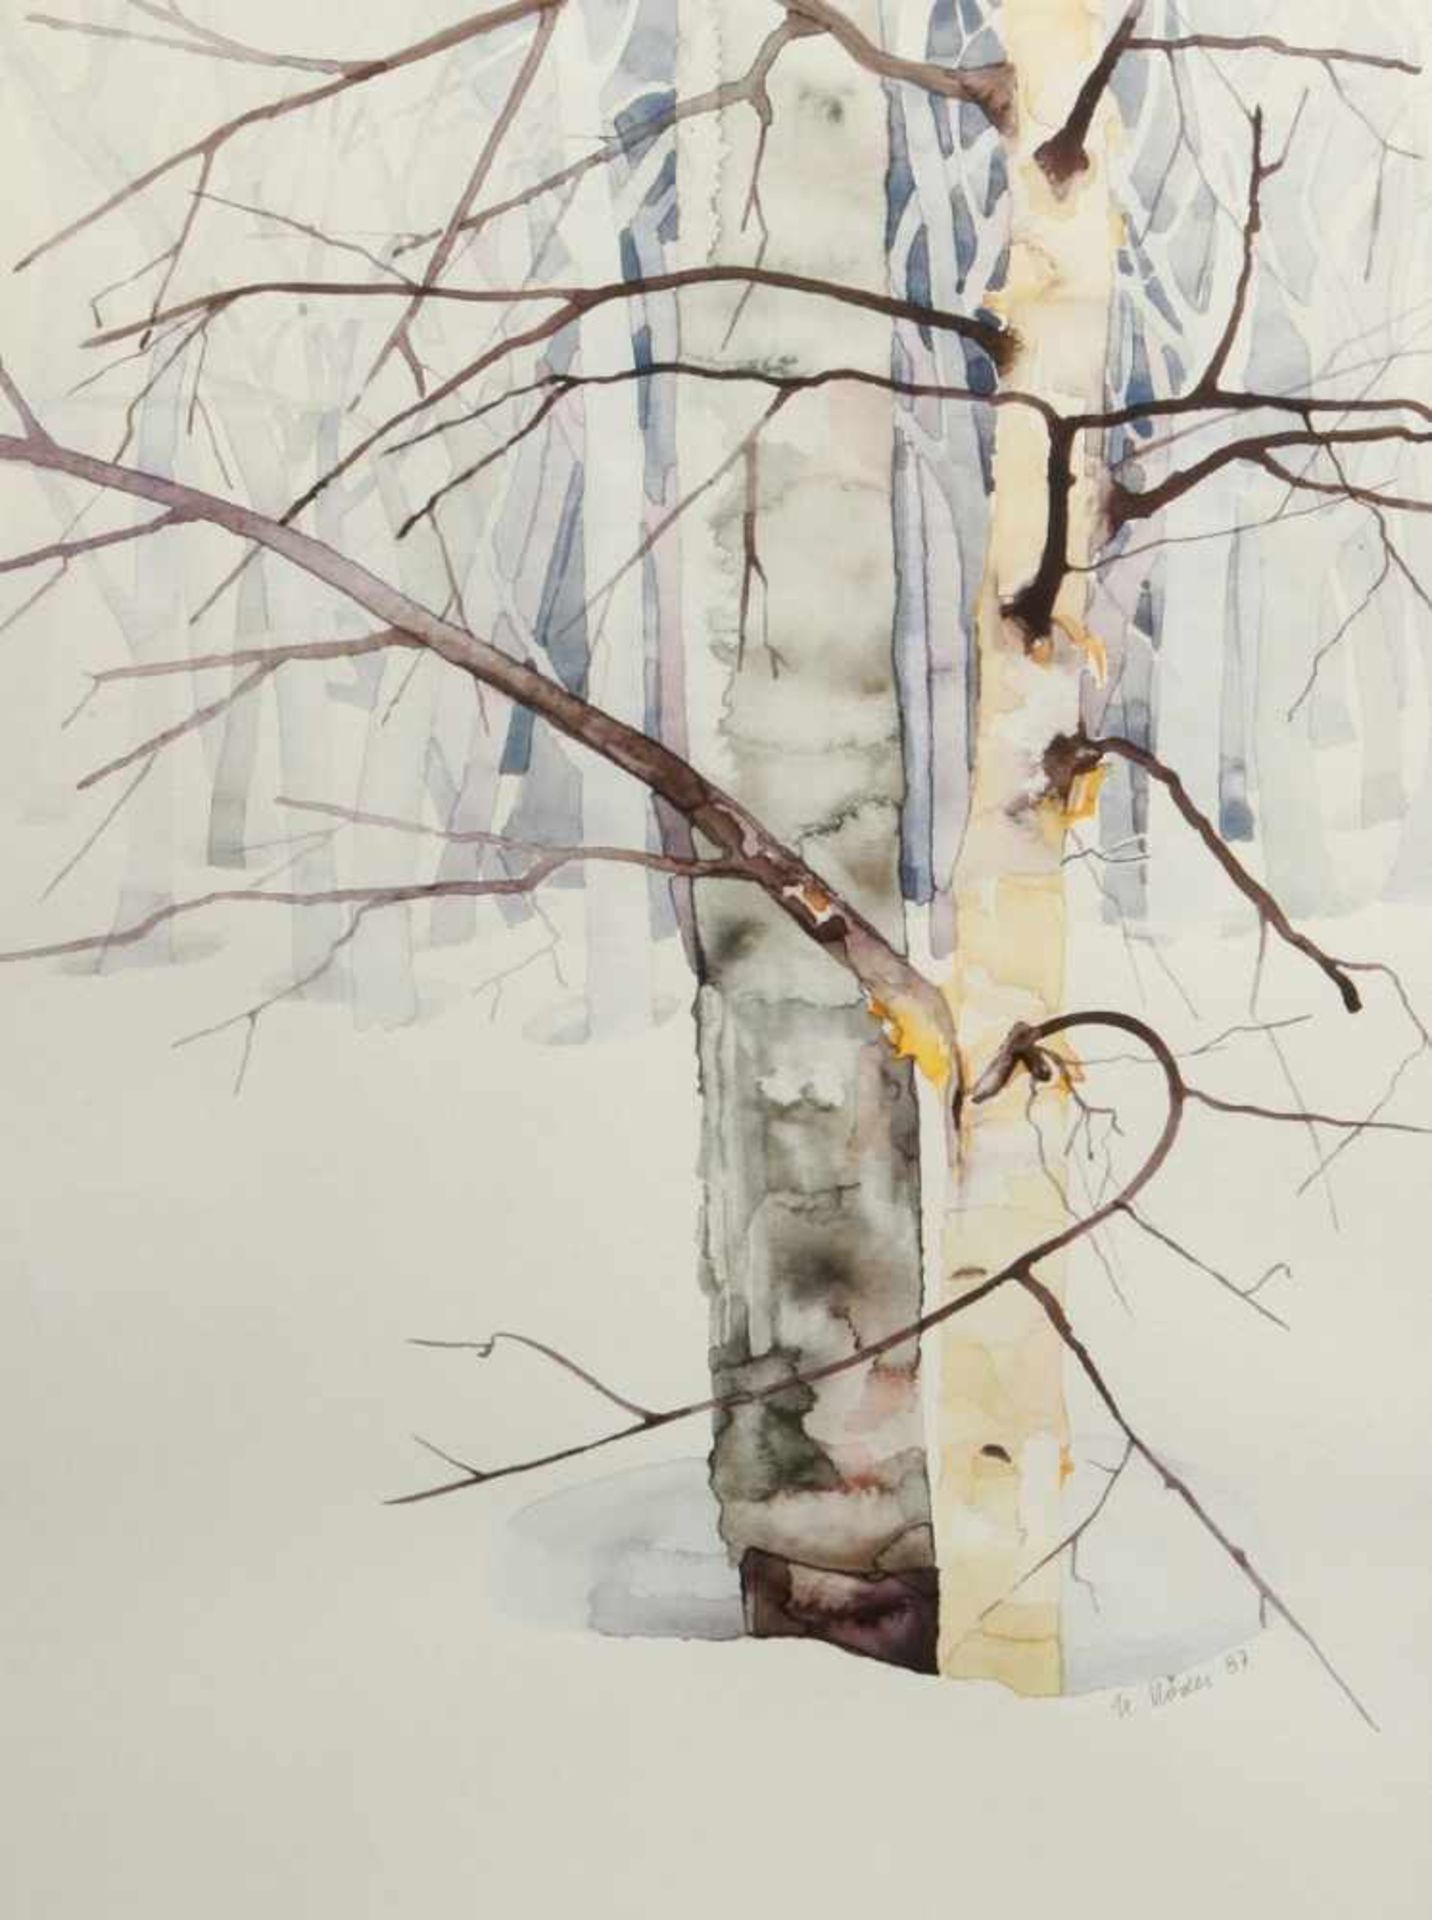 Röder, Maler 2. Hälfte 20. Jh. "Bäume", Aquarell, sign., dat. 1987, 42 x 31 cm